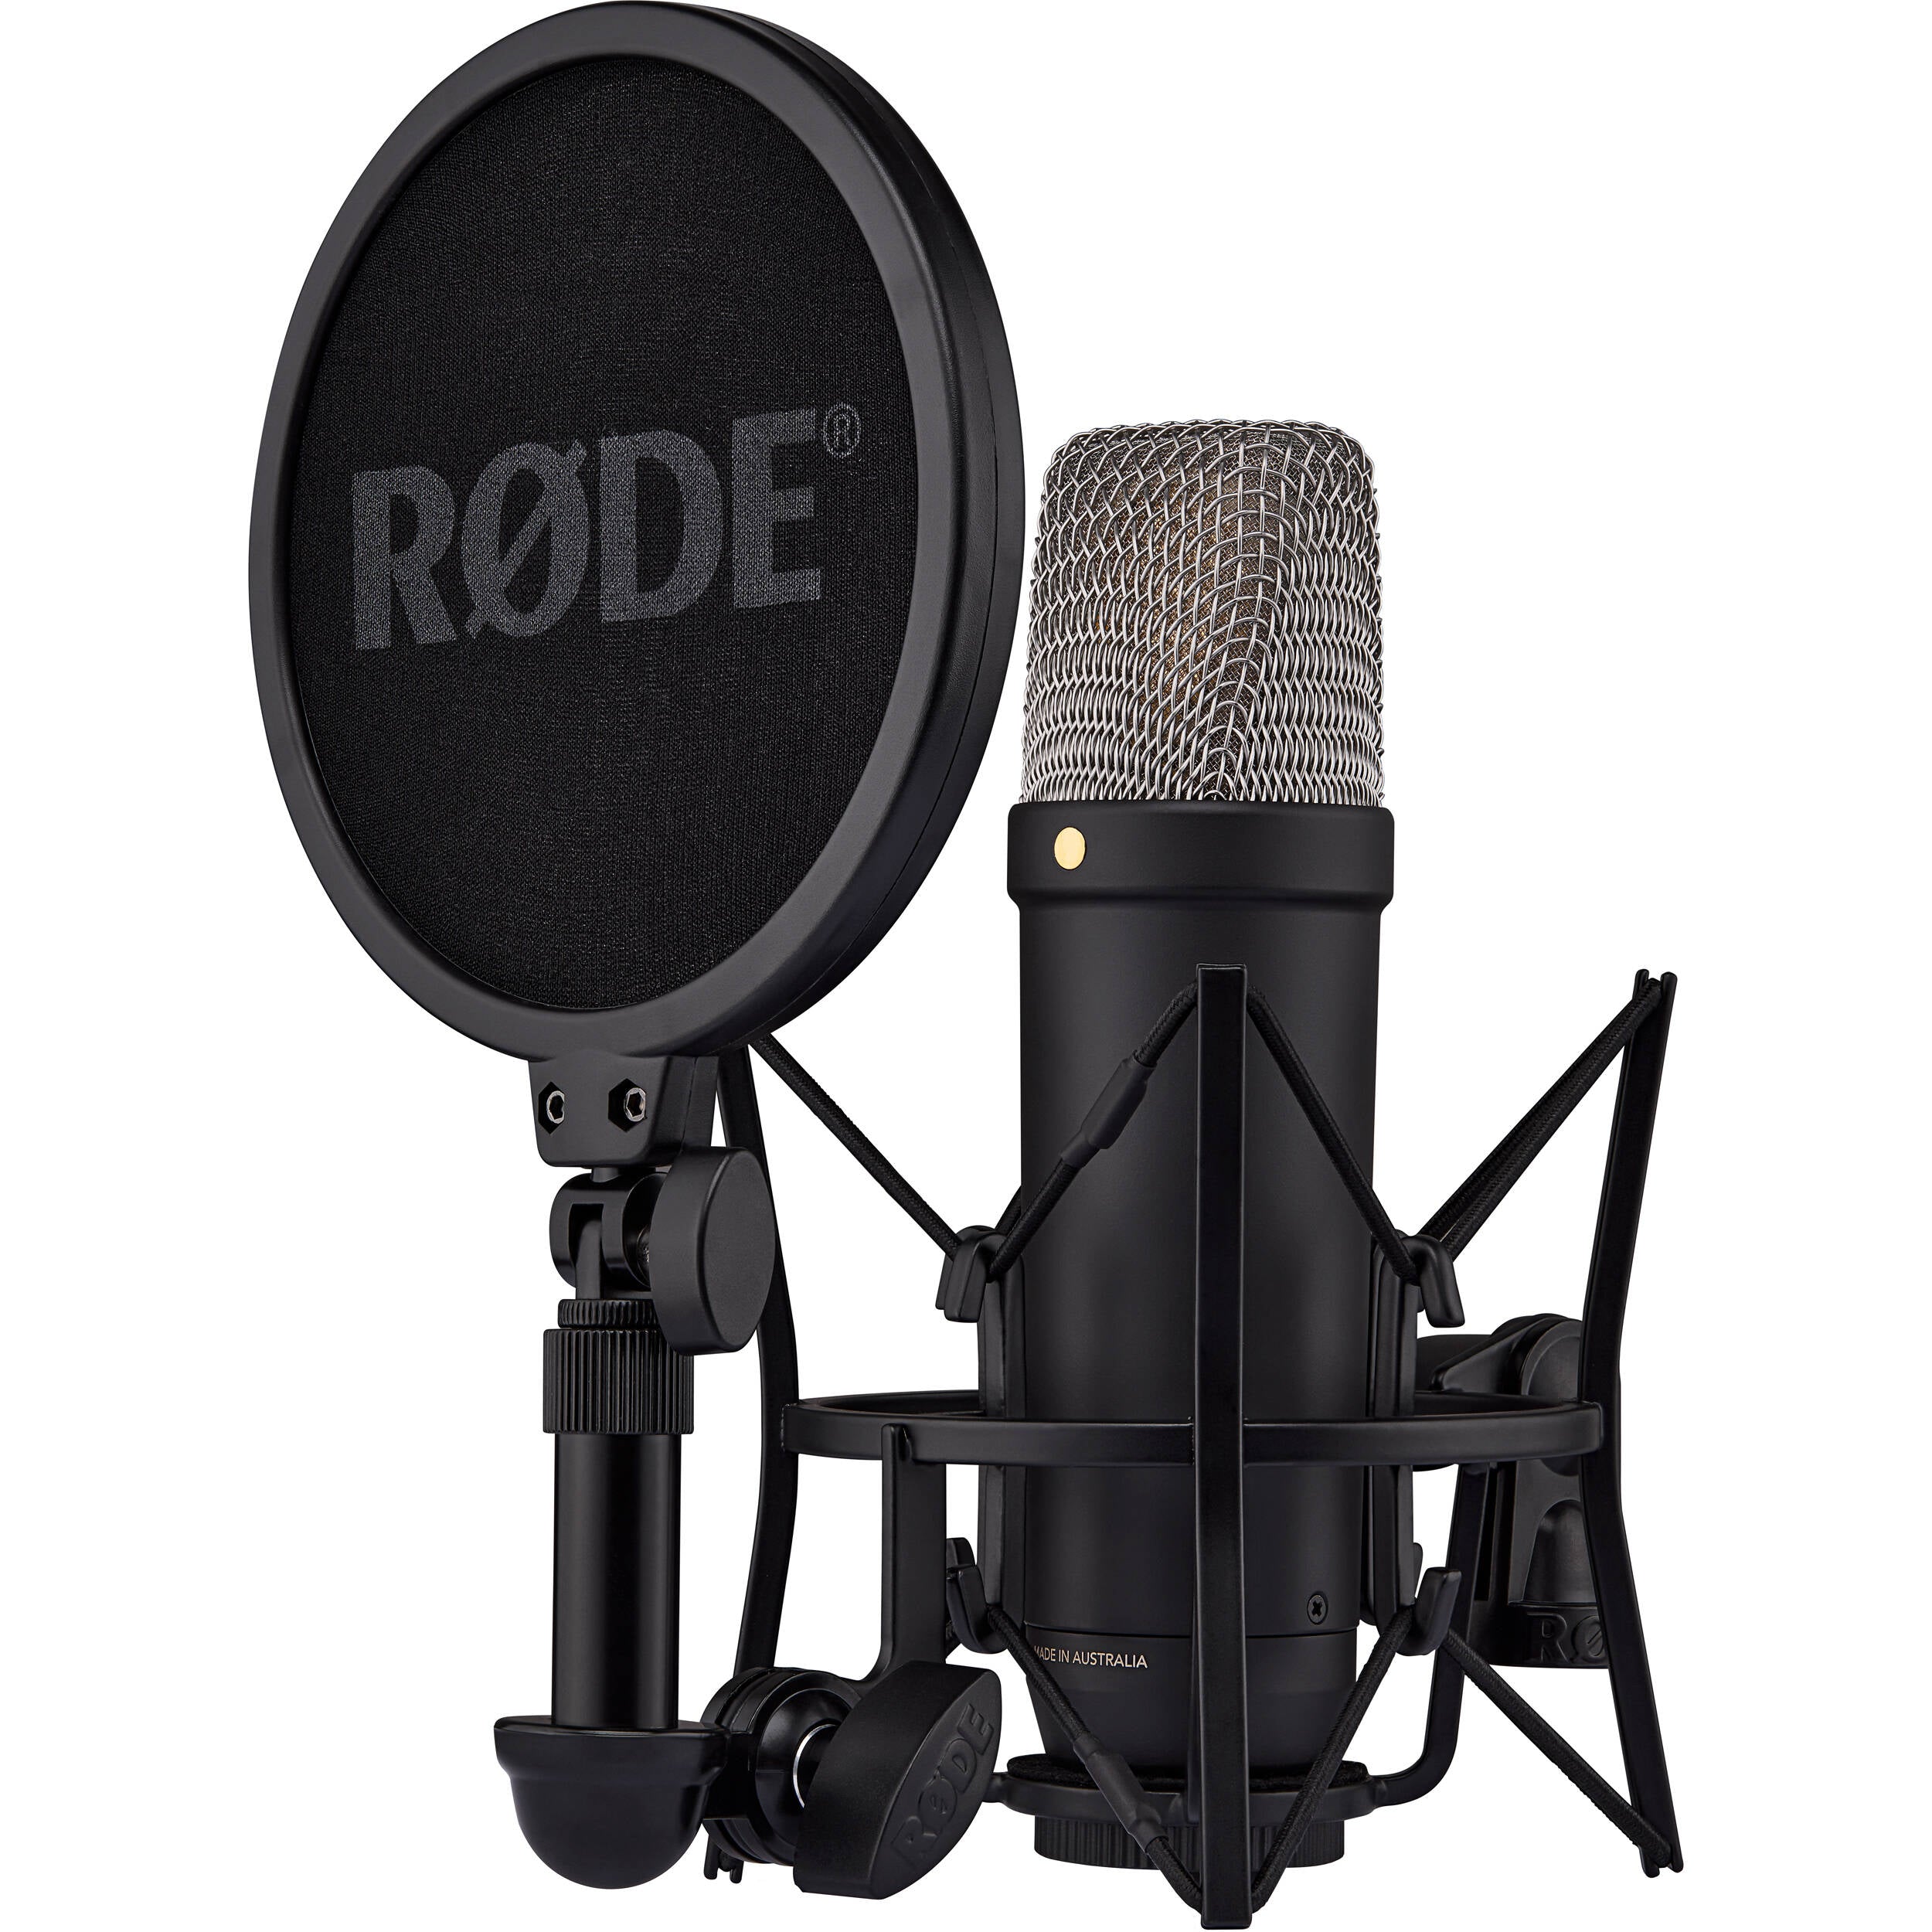 RODE NT1 5th Generation Large-Diaphragm Cardioid Condenser XLR/USB Microphone - Black